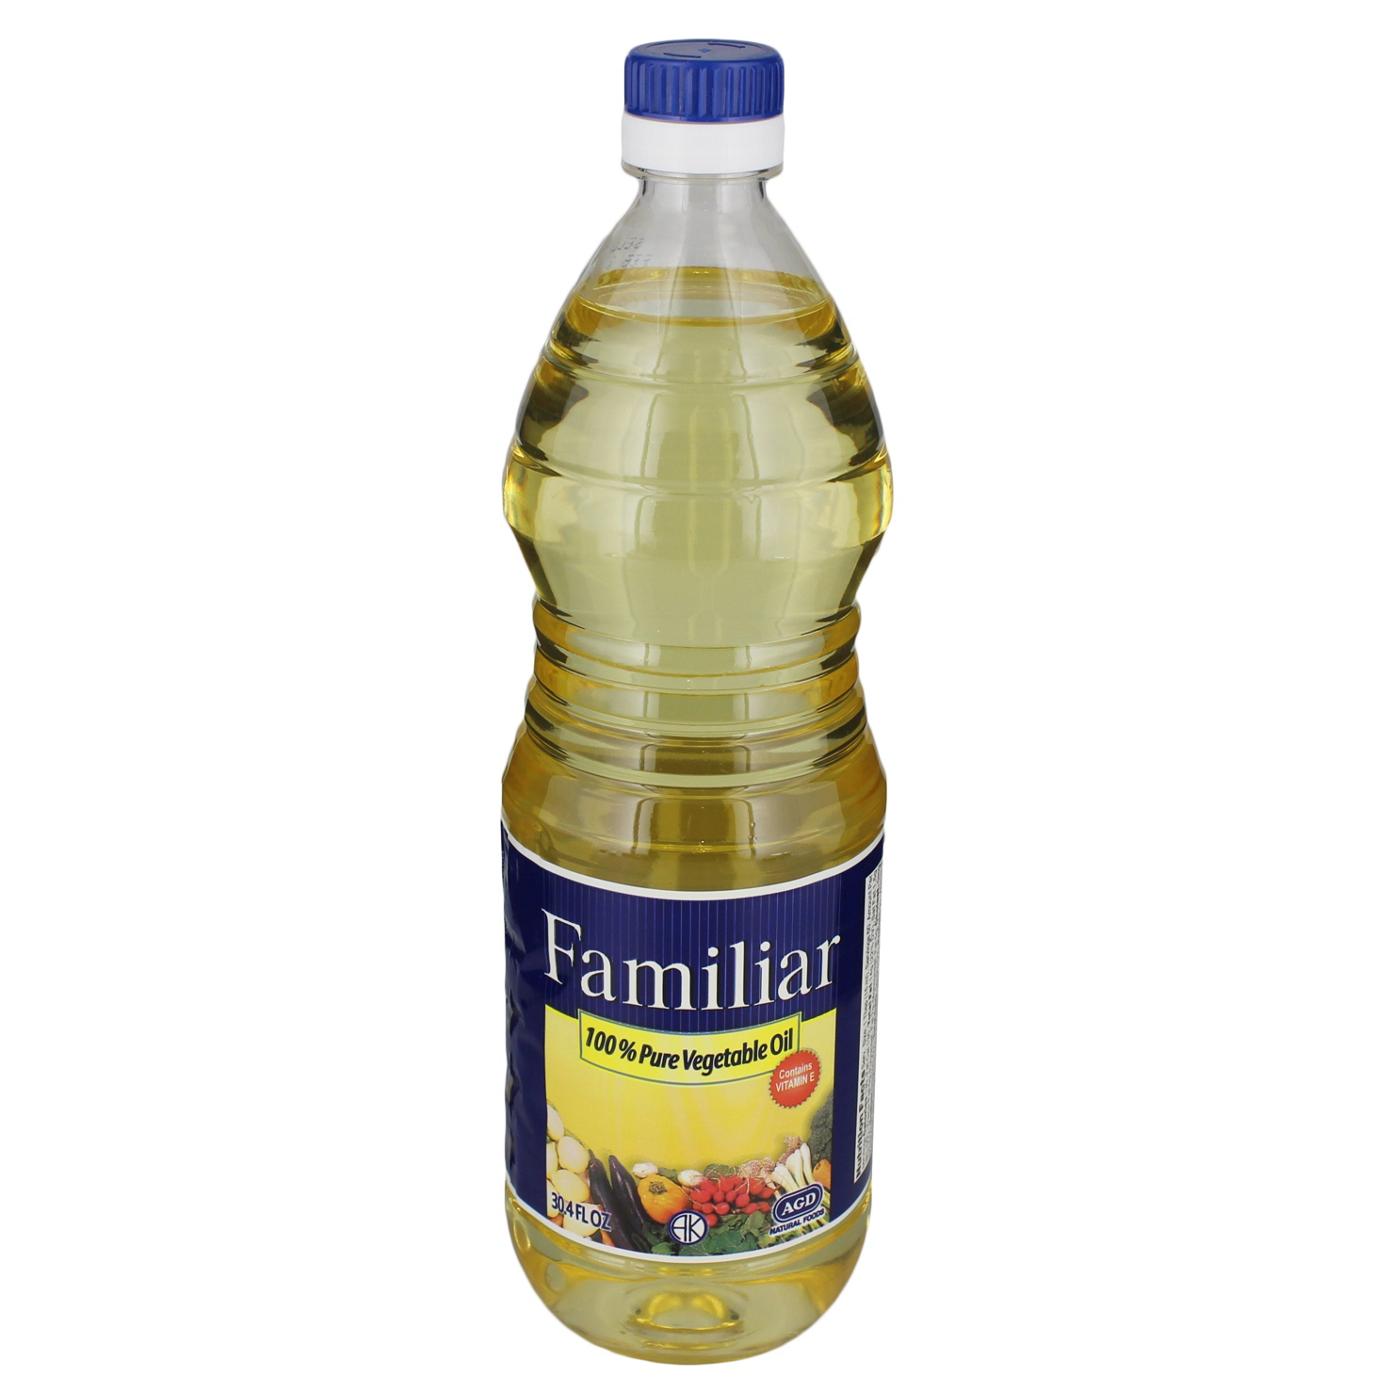 Familiar 100% Pure Vegetable Oil; image 1 of 2